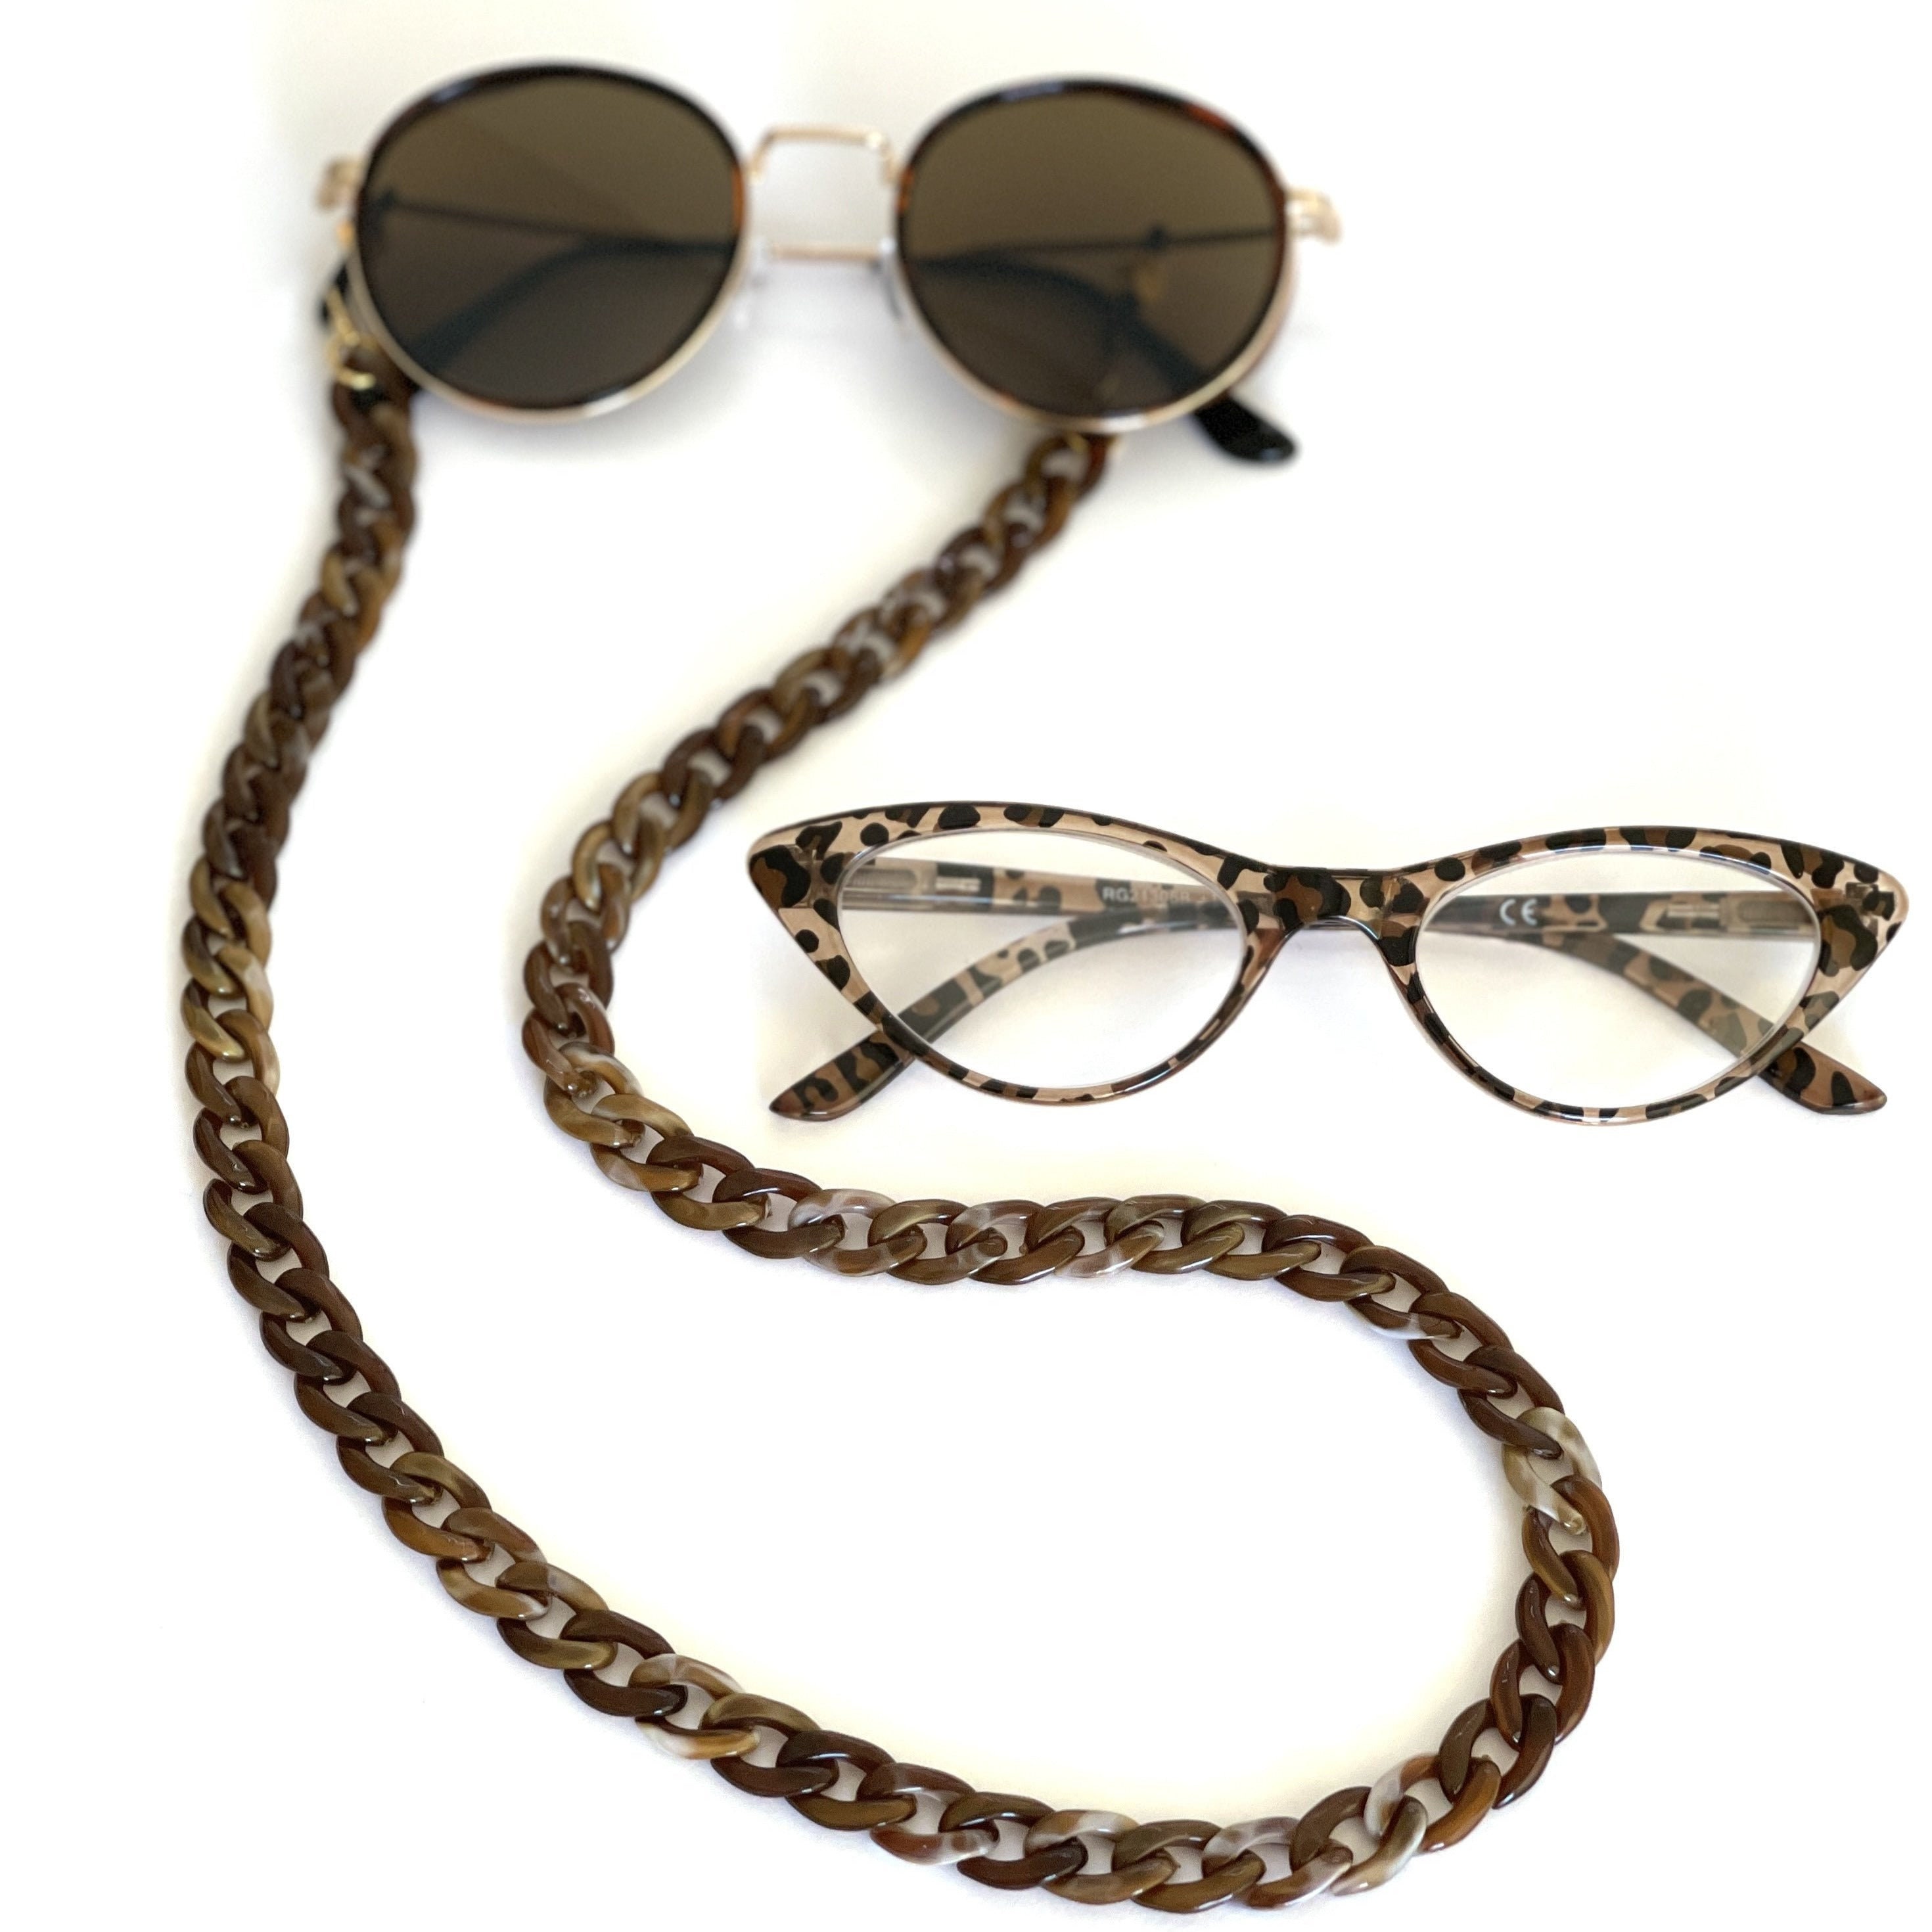 Sunglasses Chain Mocha Colour Sunglasses Chain Fashion 